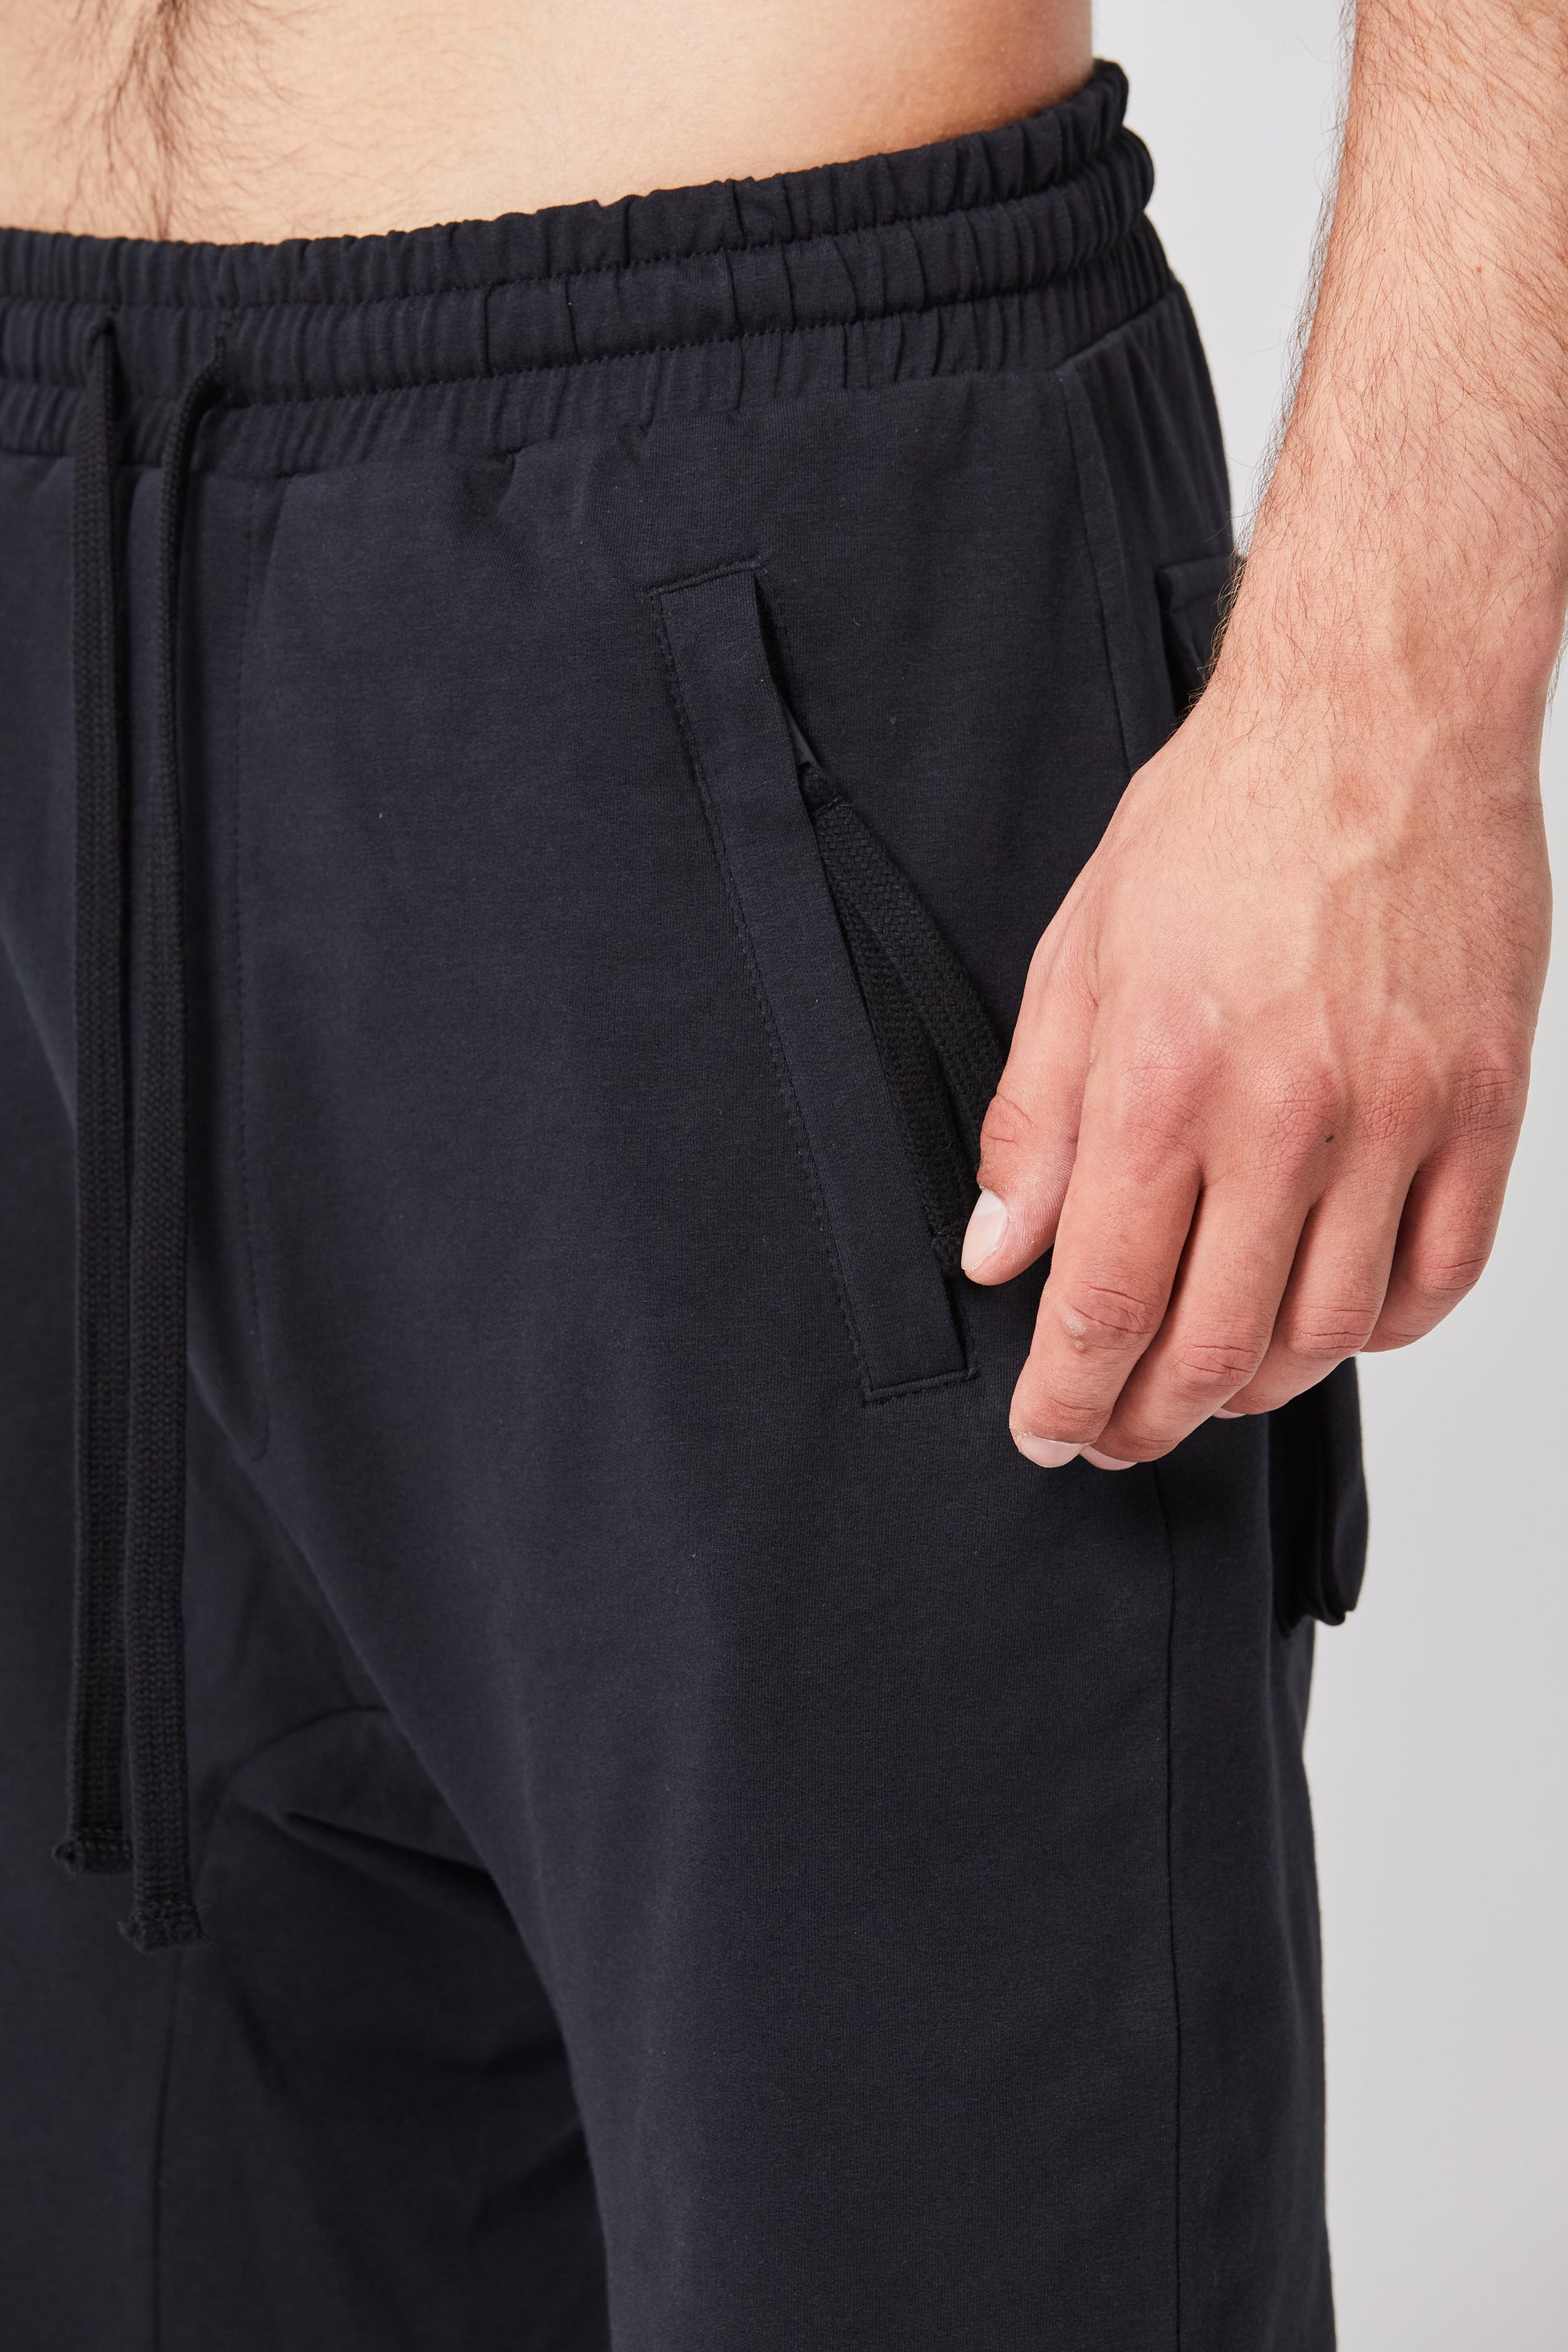 Archive – Cotton Crotch 379 Stretch Modal The Drop Shorts MST Black